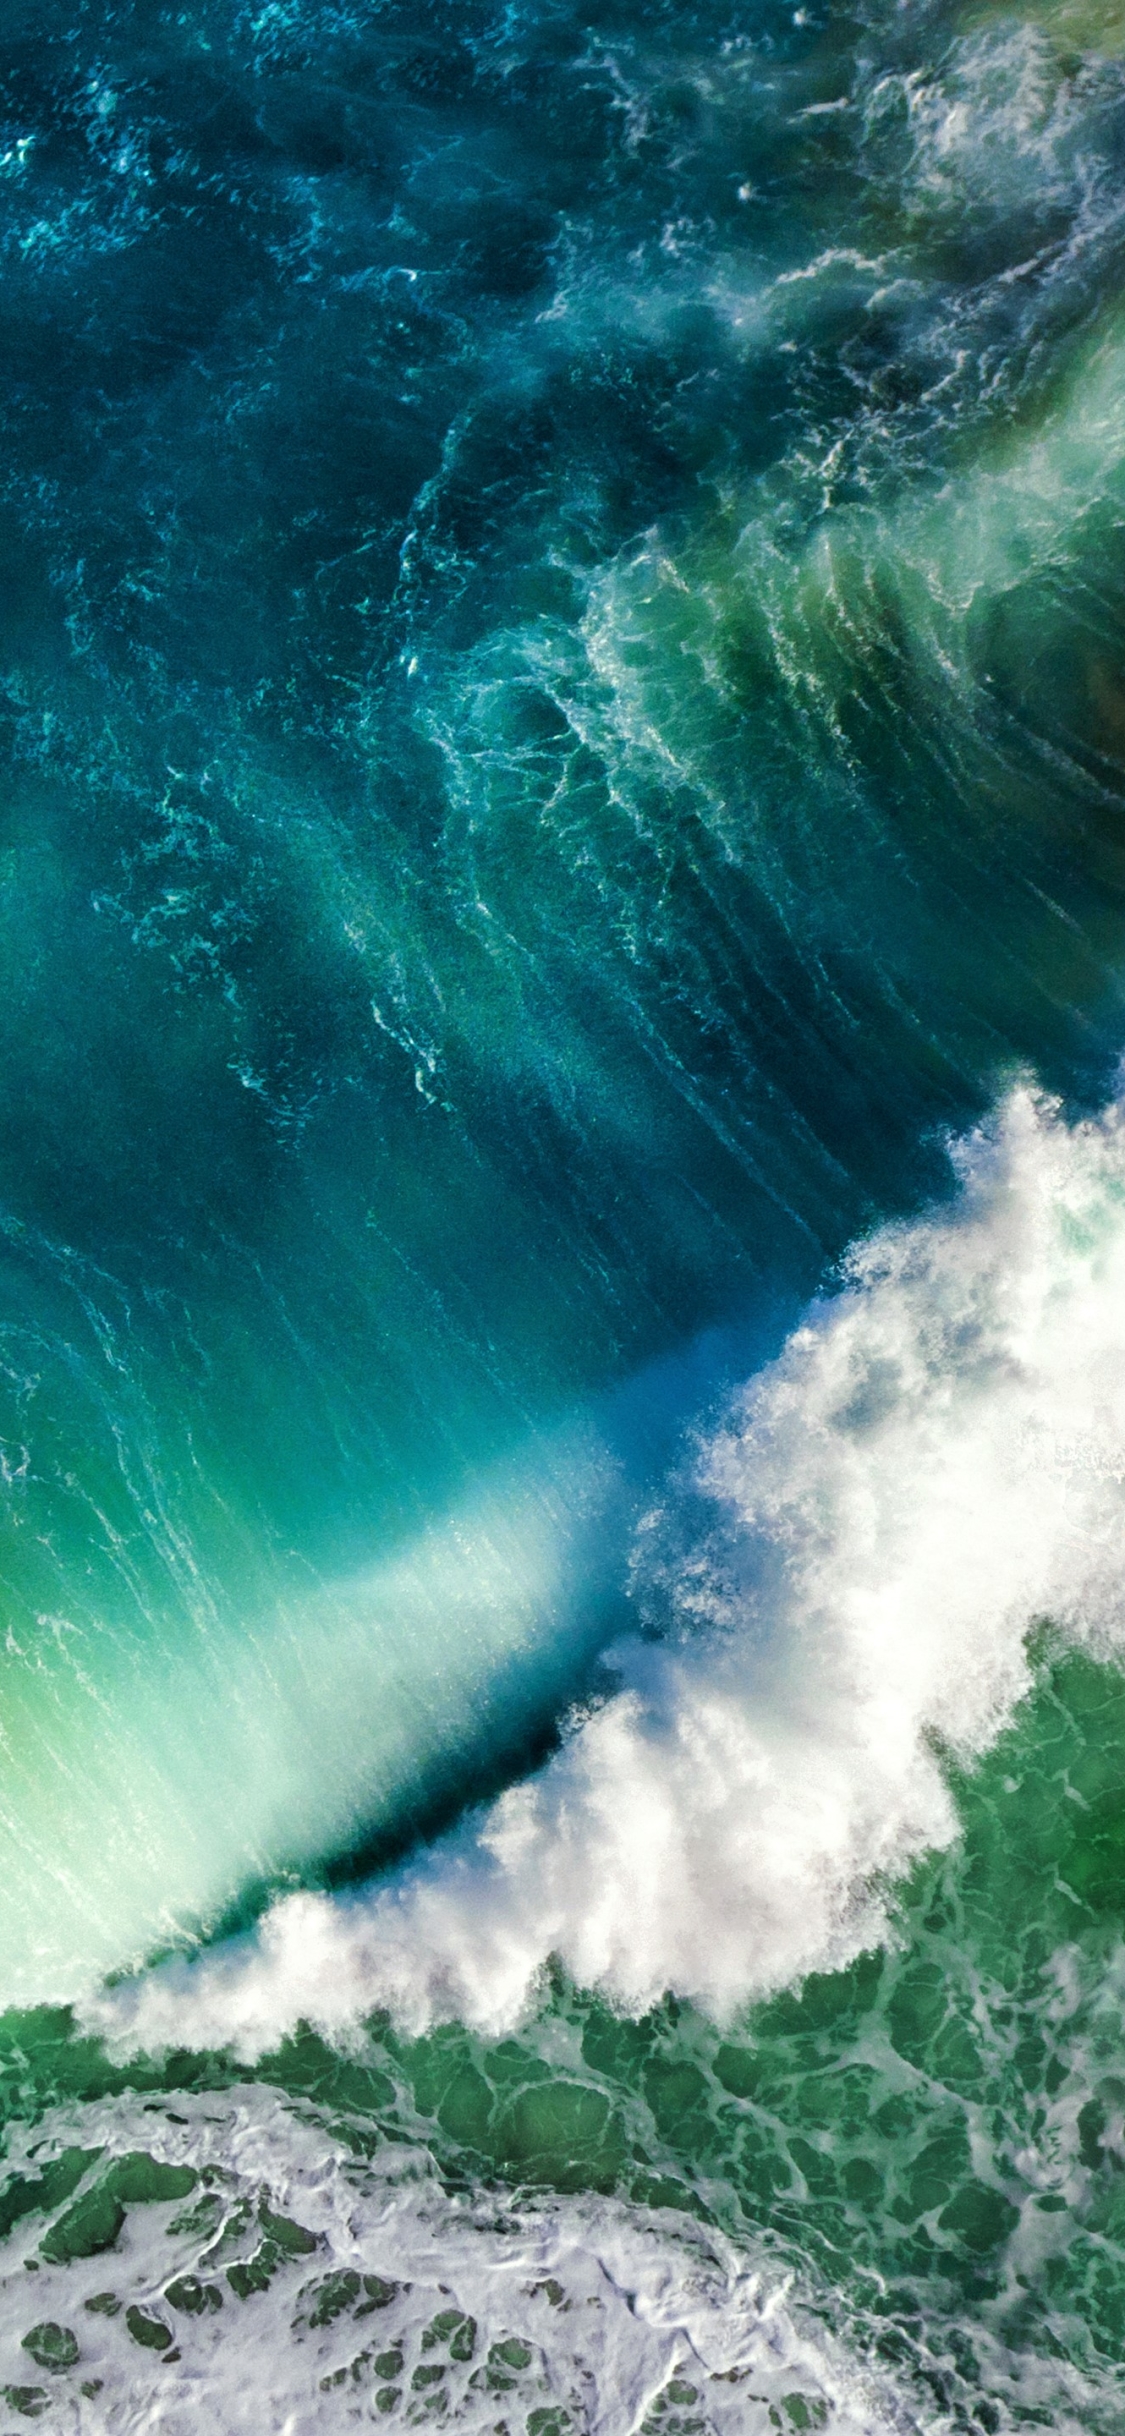 Descarga gratuita de fondo de pantalla para móvil de Mar, Océano, Ola, Tierra/naturaleza, Fotografía Aérea, Aéreo.